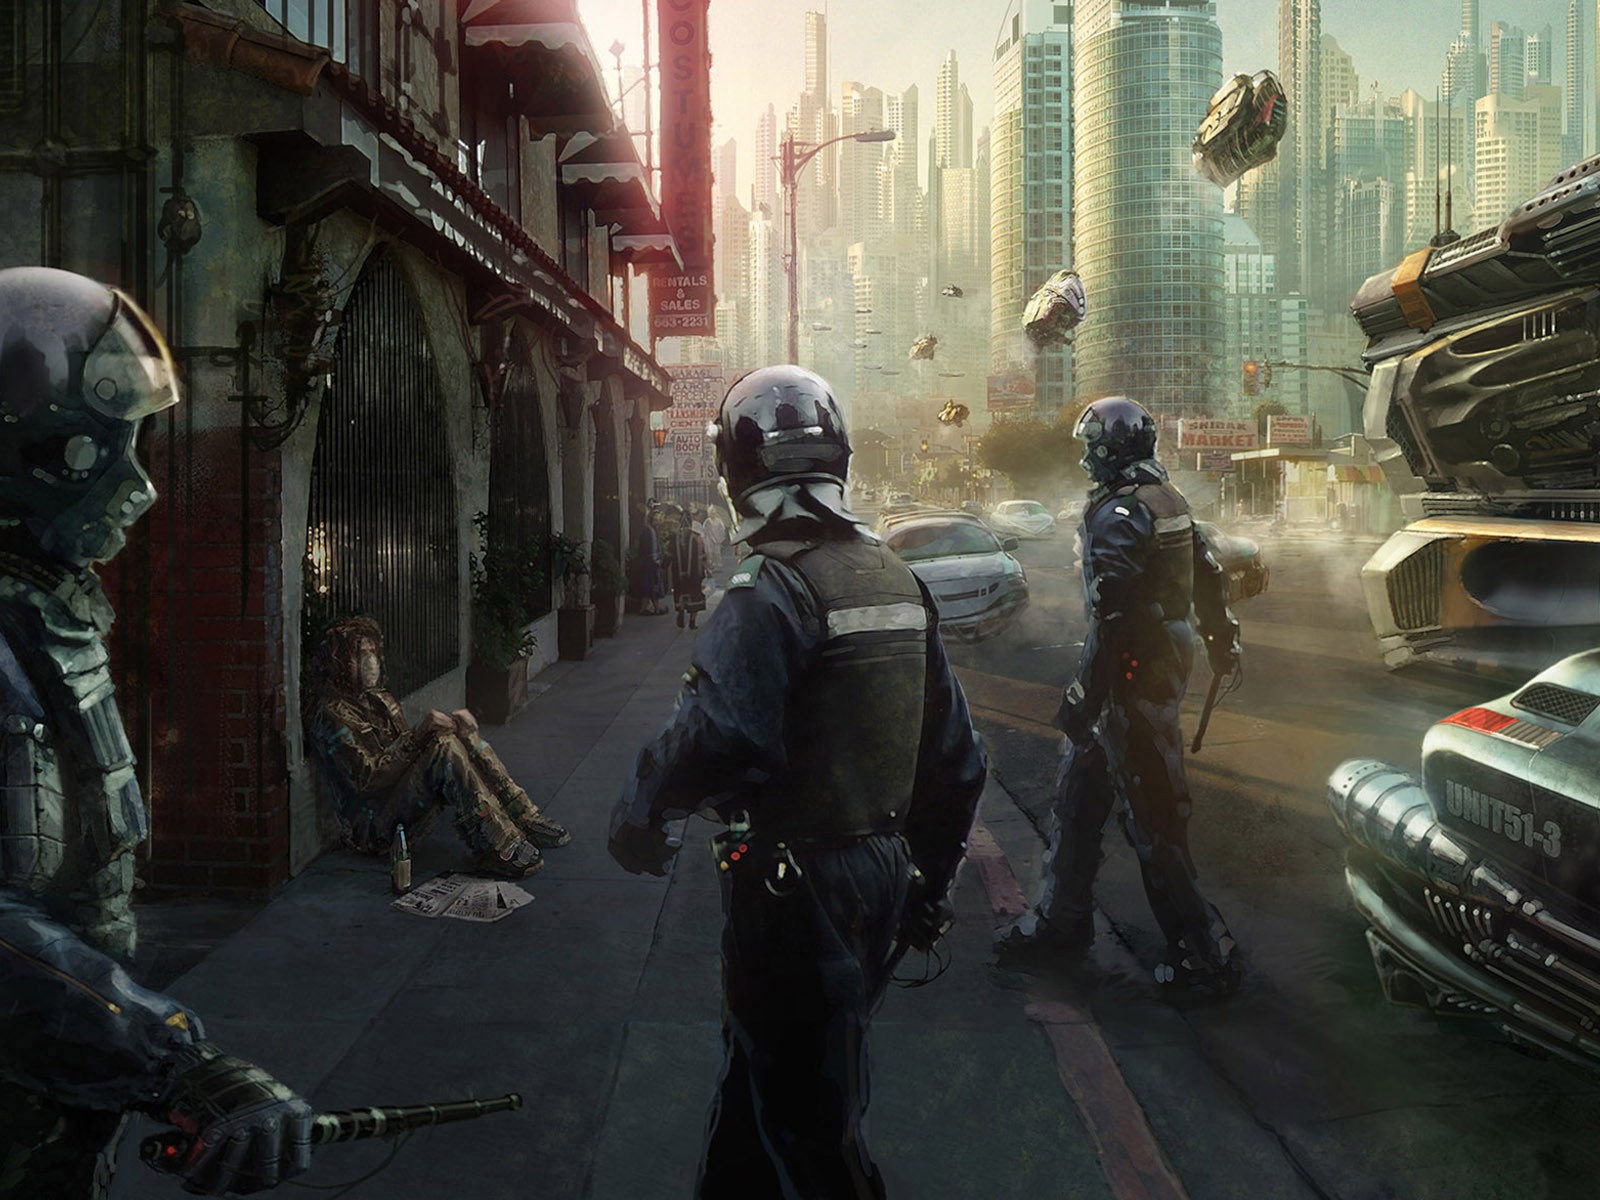 General 1600x1200 dystopian artwork futuristic futuristic city science fiction police city urban street